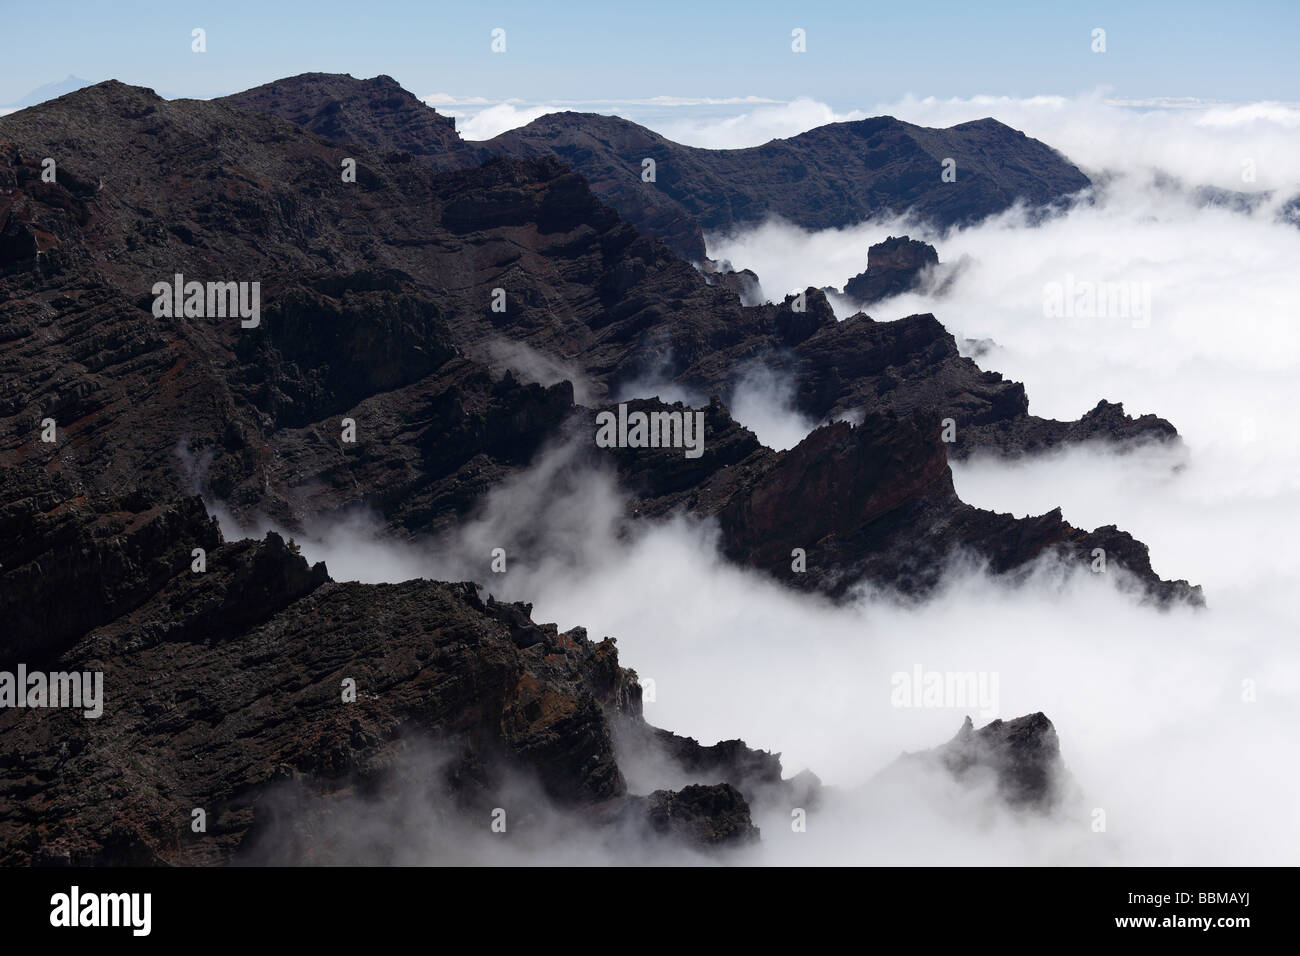 Sea of clouds, Caldera de Taburiente National Park, La Palma, Canary Islands, Spain Stock Photo